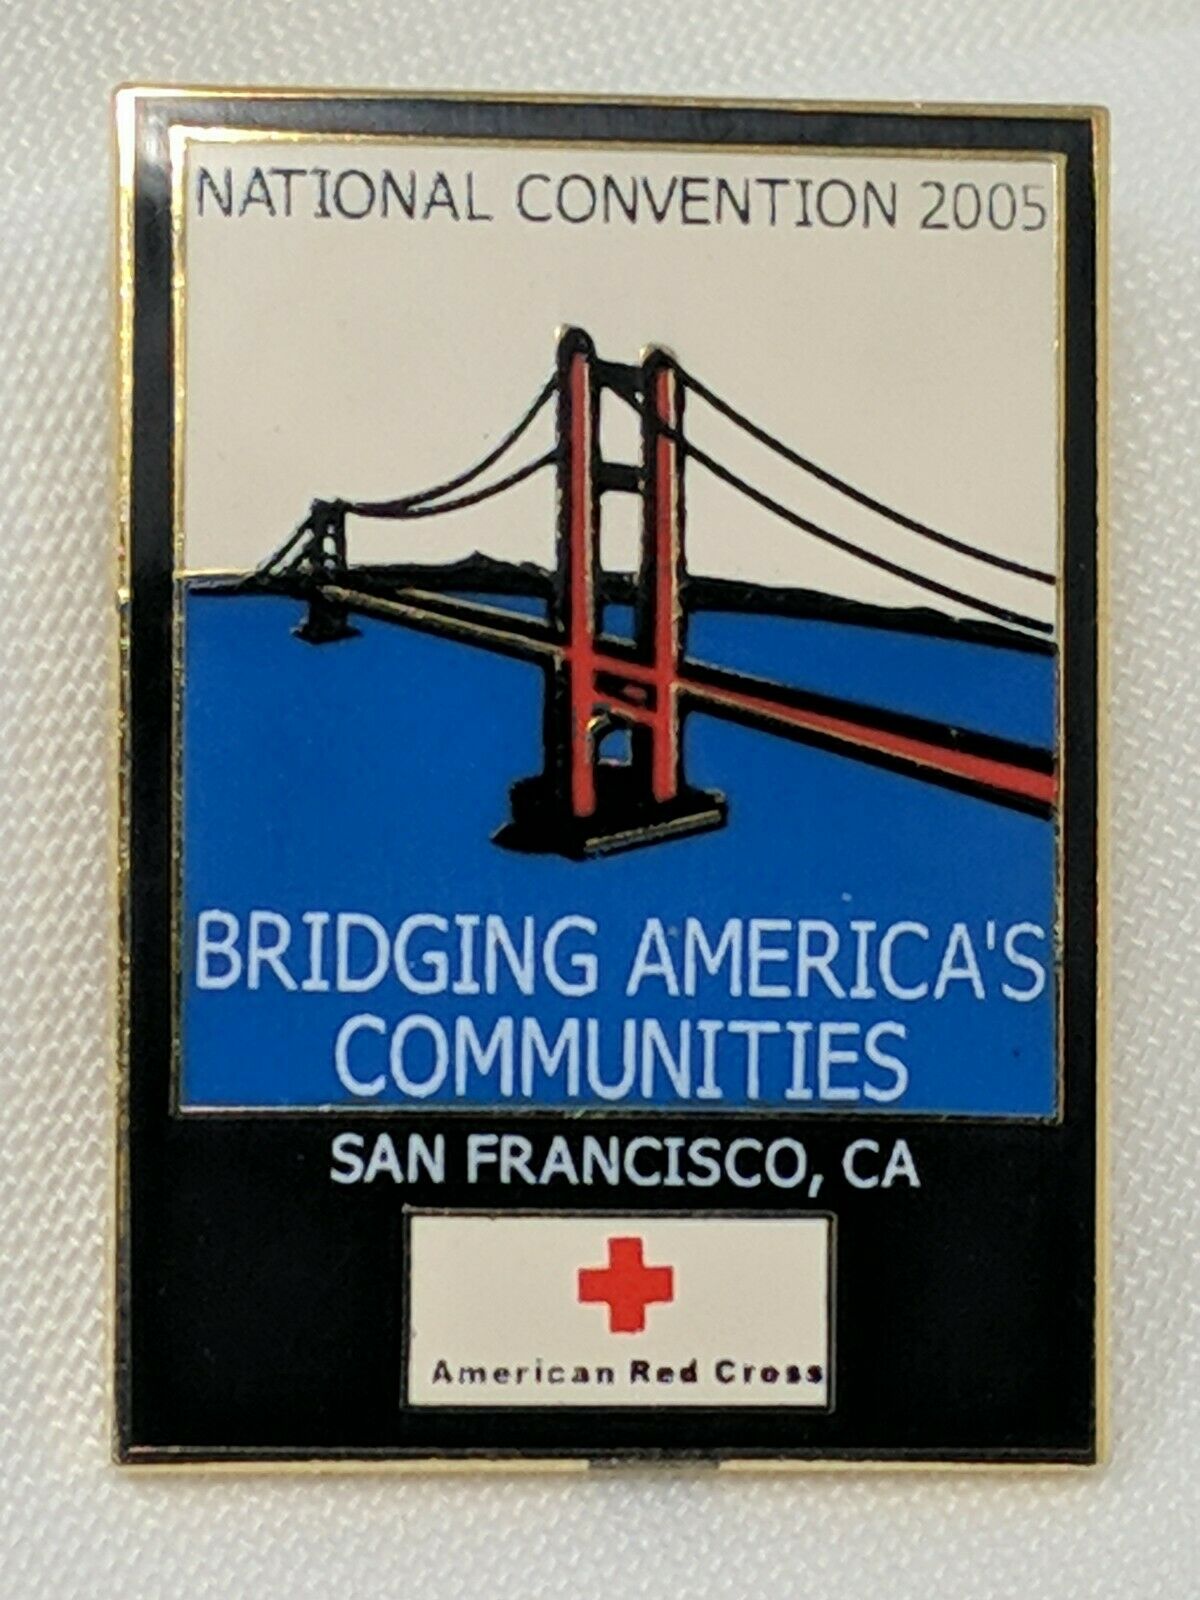 American Red Cross Arc Bridging America's Communities San Francisco Ca Pin 8/30